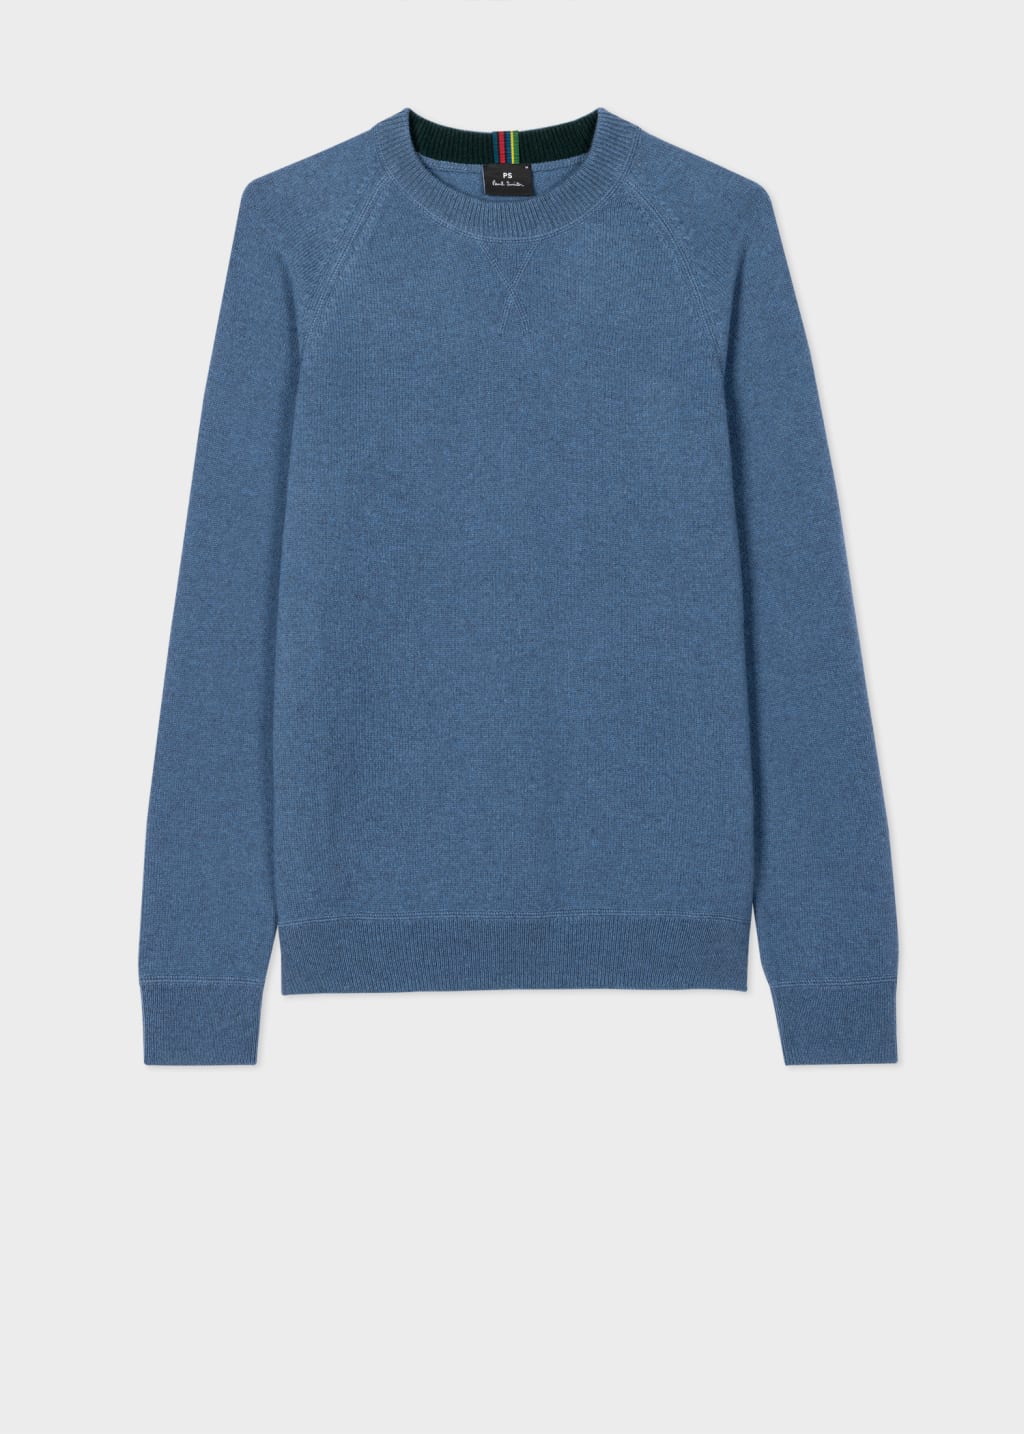 Front View - Blue Merino Wool Raglan Sweater Paul Smith